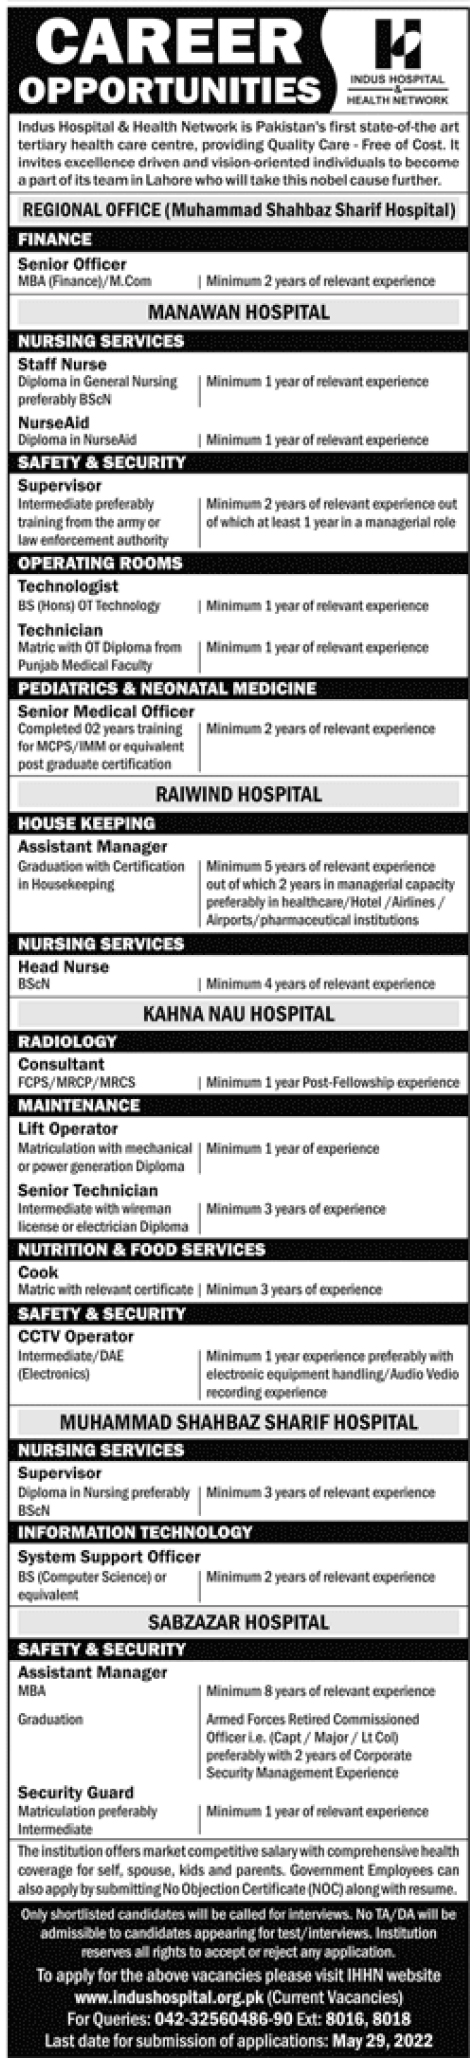 Indus Hospital & Health Network Jobs 2022 | www.indushospital.org.pk